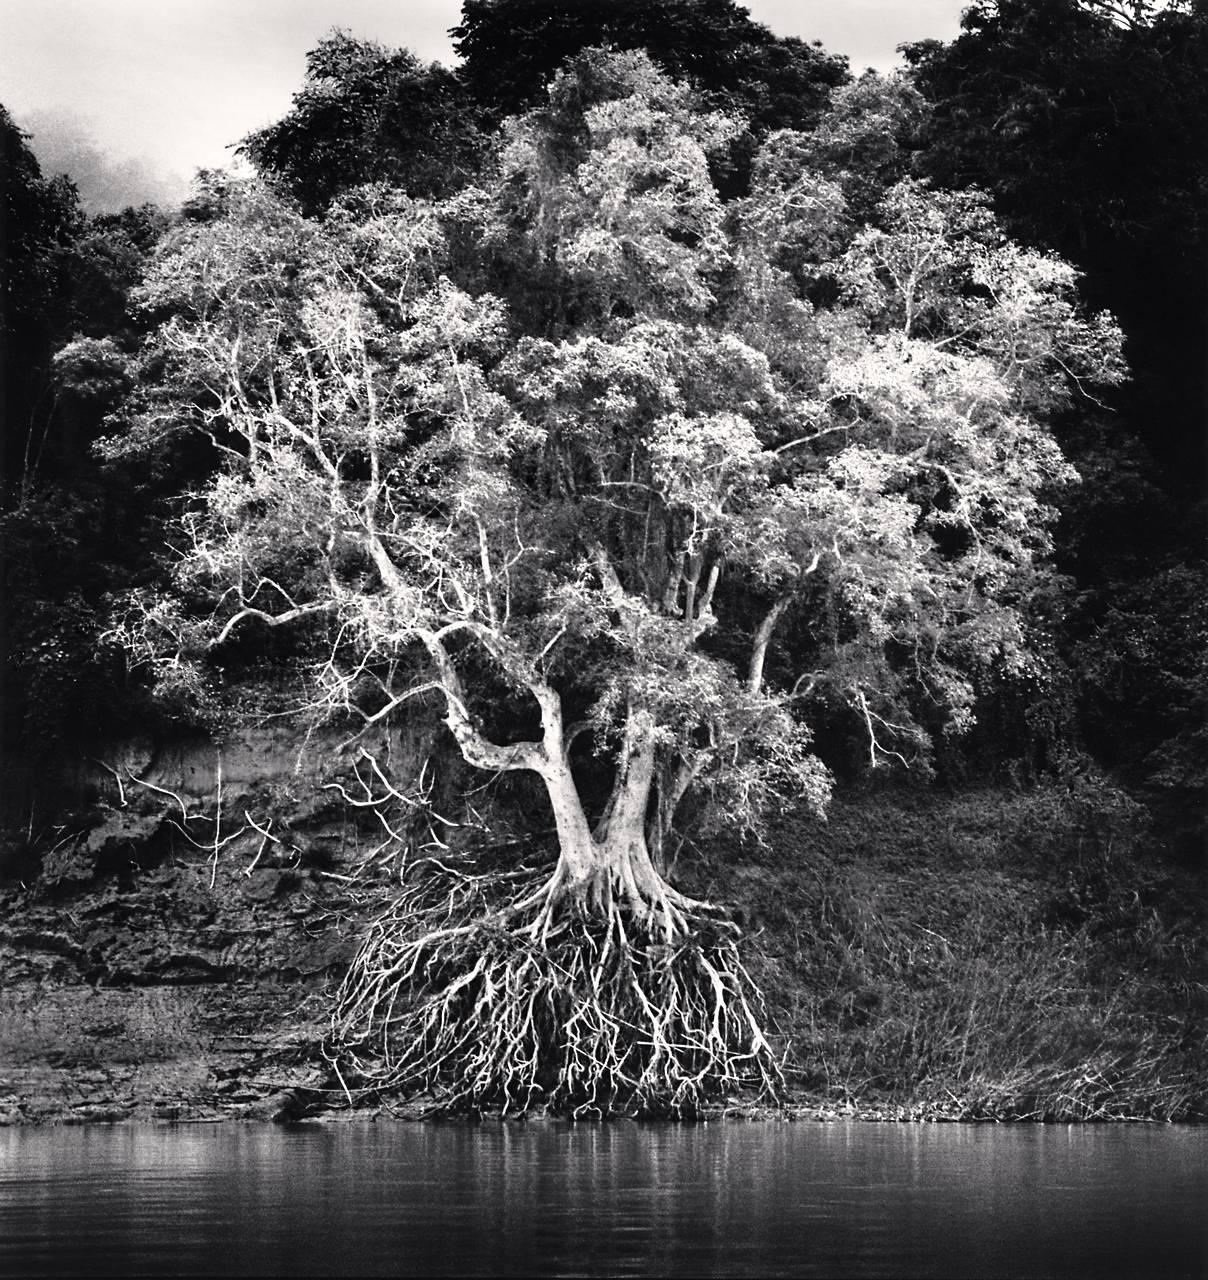 Michael Kenna Black and White Photograph - Kokdua Tree and Exposed Roots, Mekong River, Luang Prabang, Laos